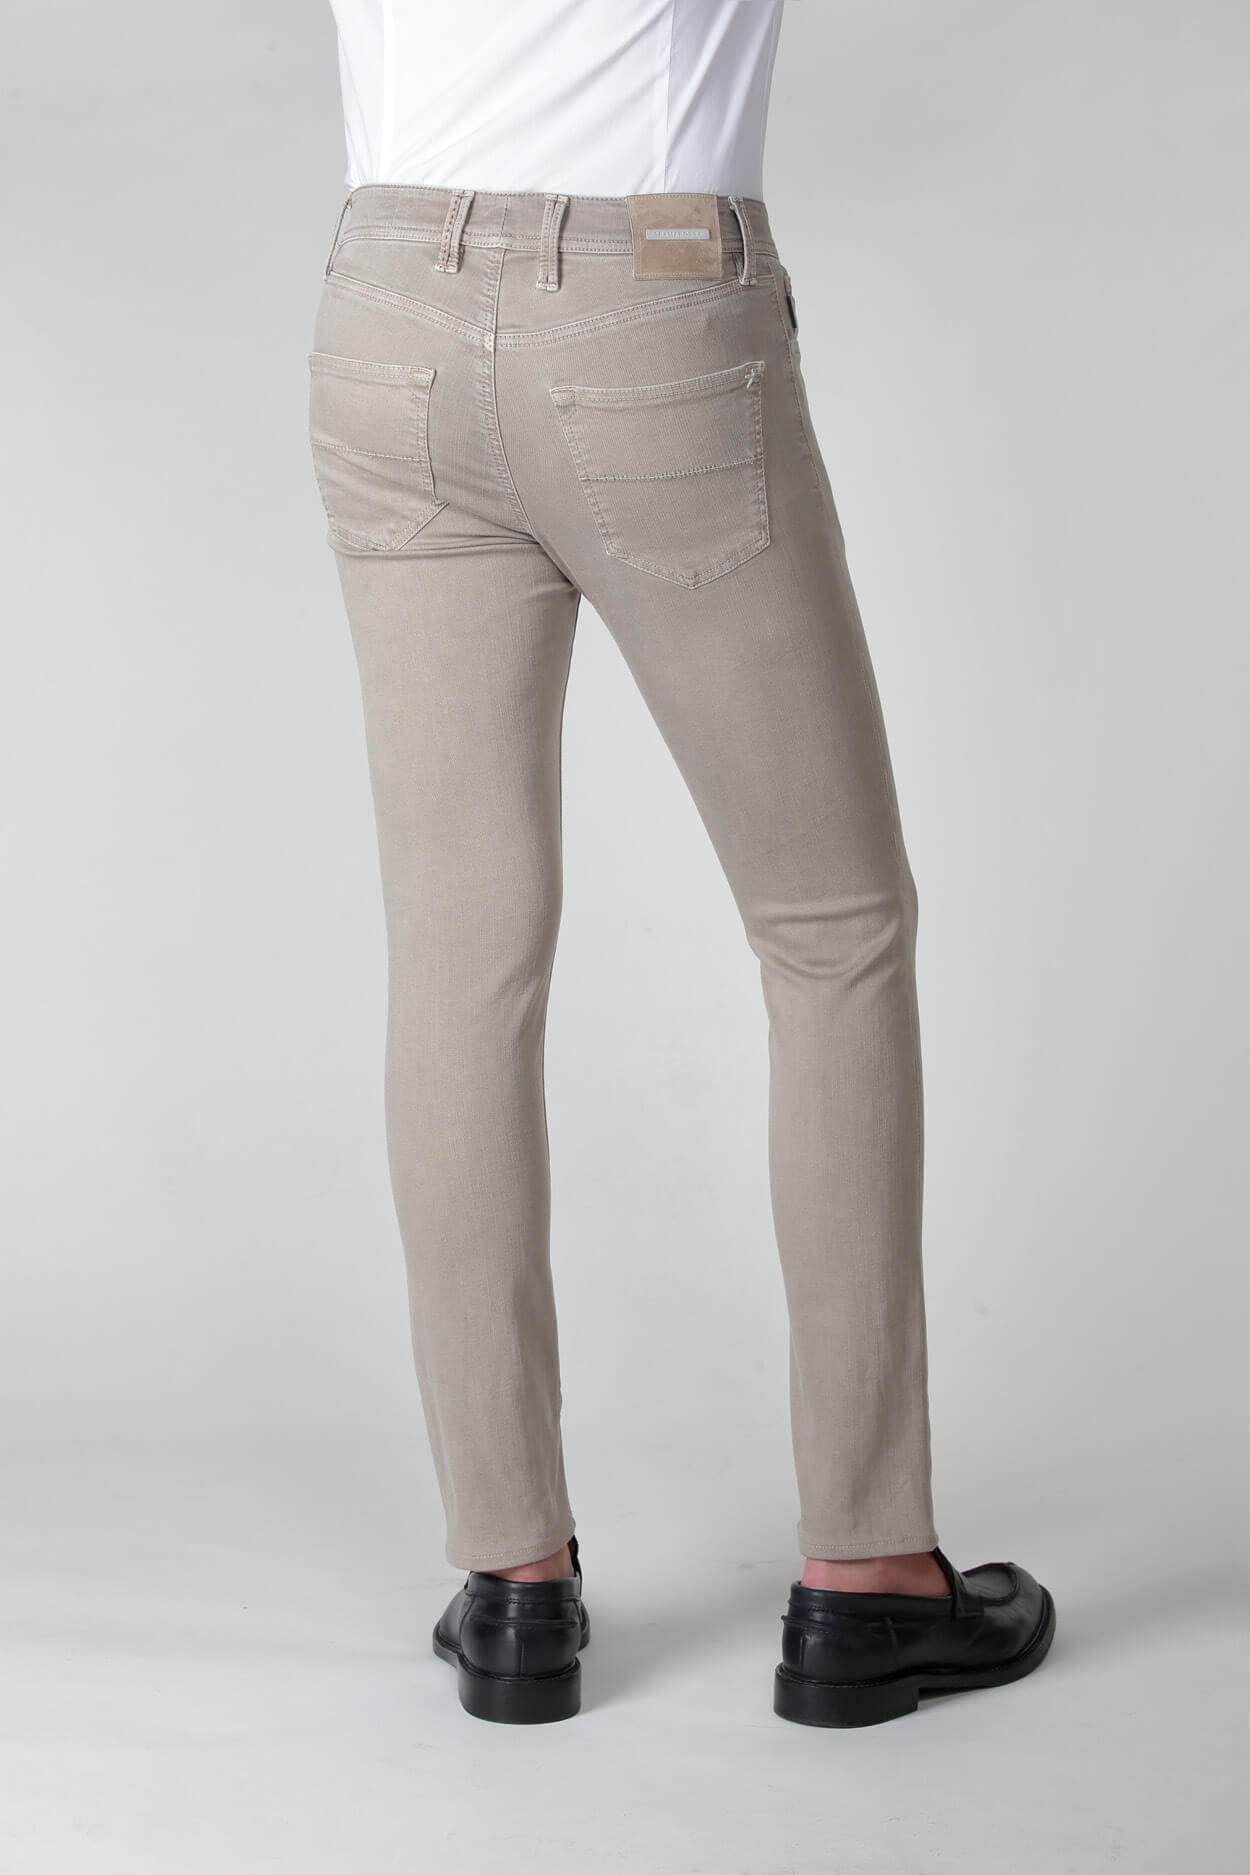 Tramarossa Jeans - COLORED SUPERSTRETCH GABARDINE - Model: LEONARDO SLIM